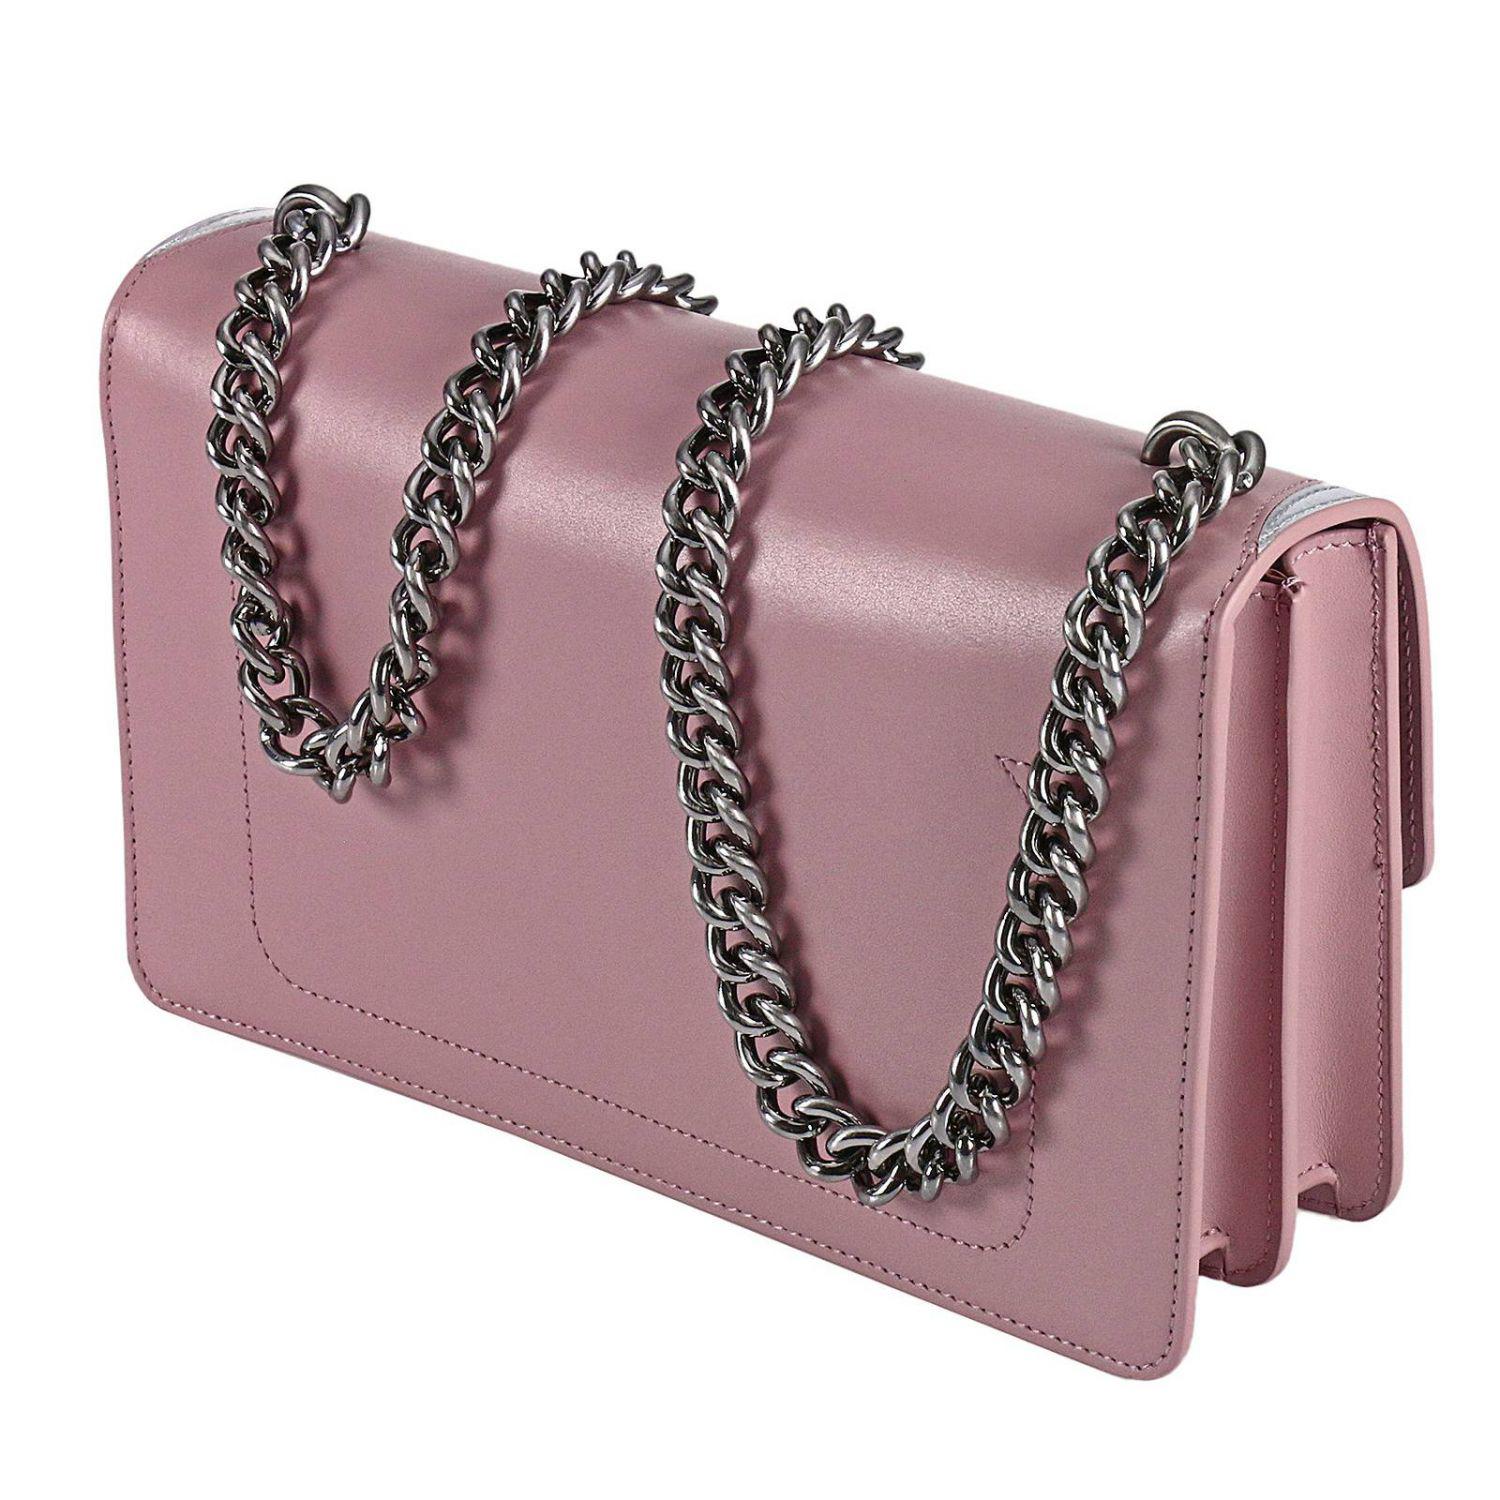 Pinko Love Me Tender Leather Cross-body Bag in Pink - Lyst